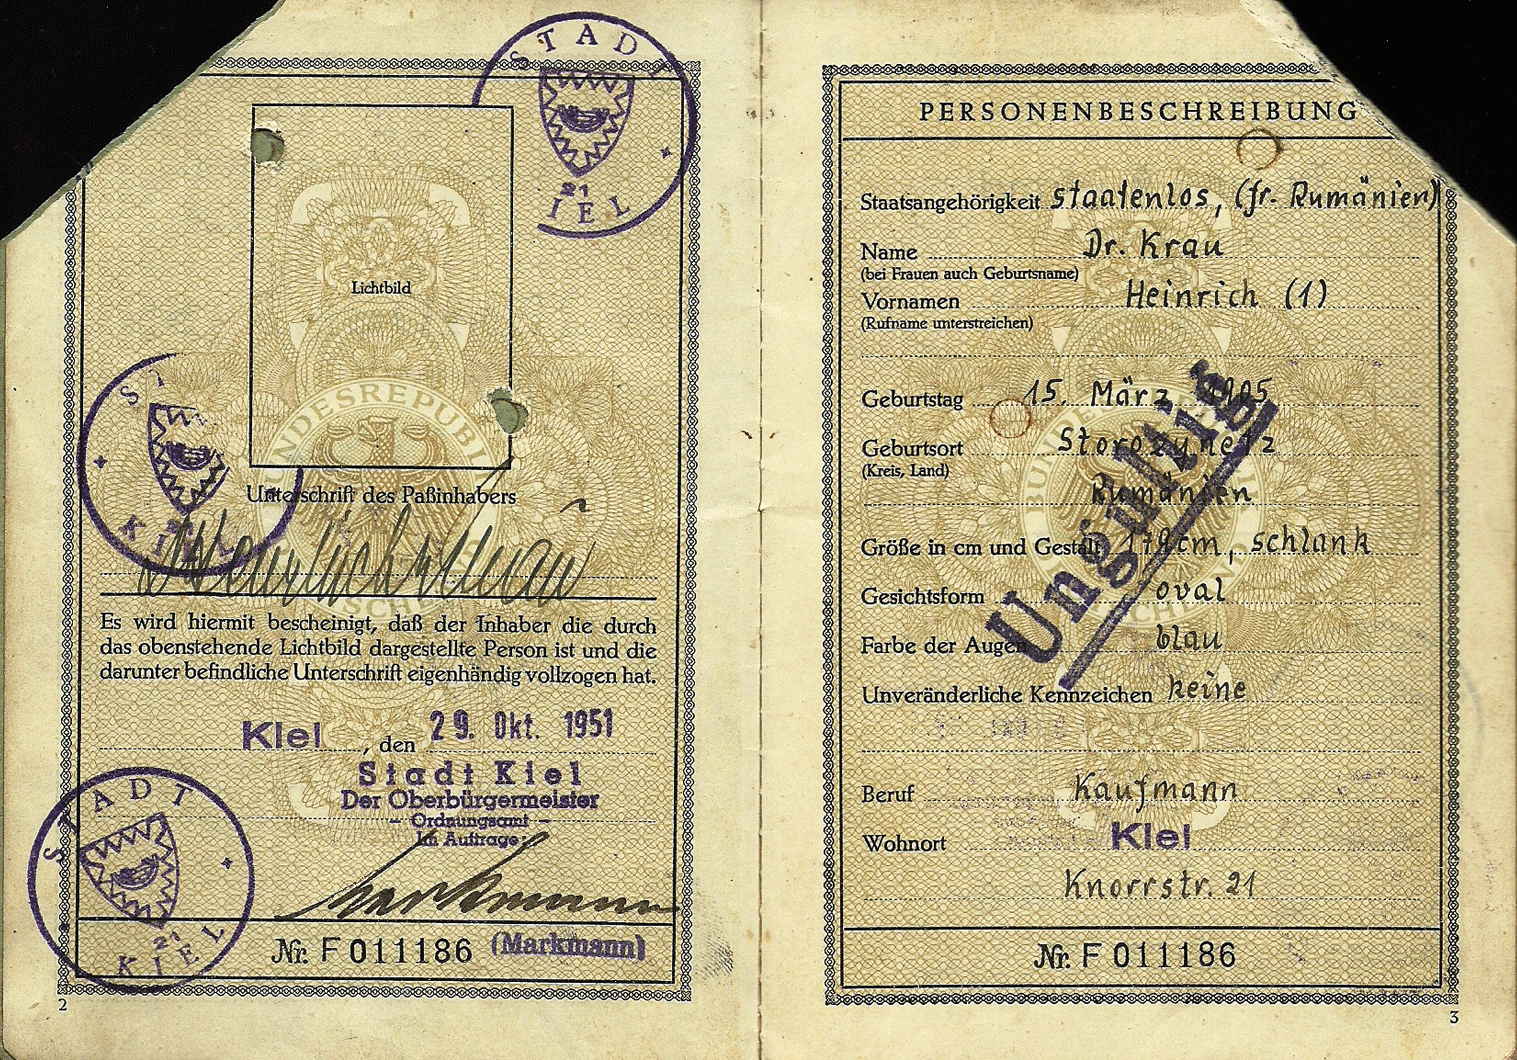 1951 early German passport  Fremdenpass